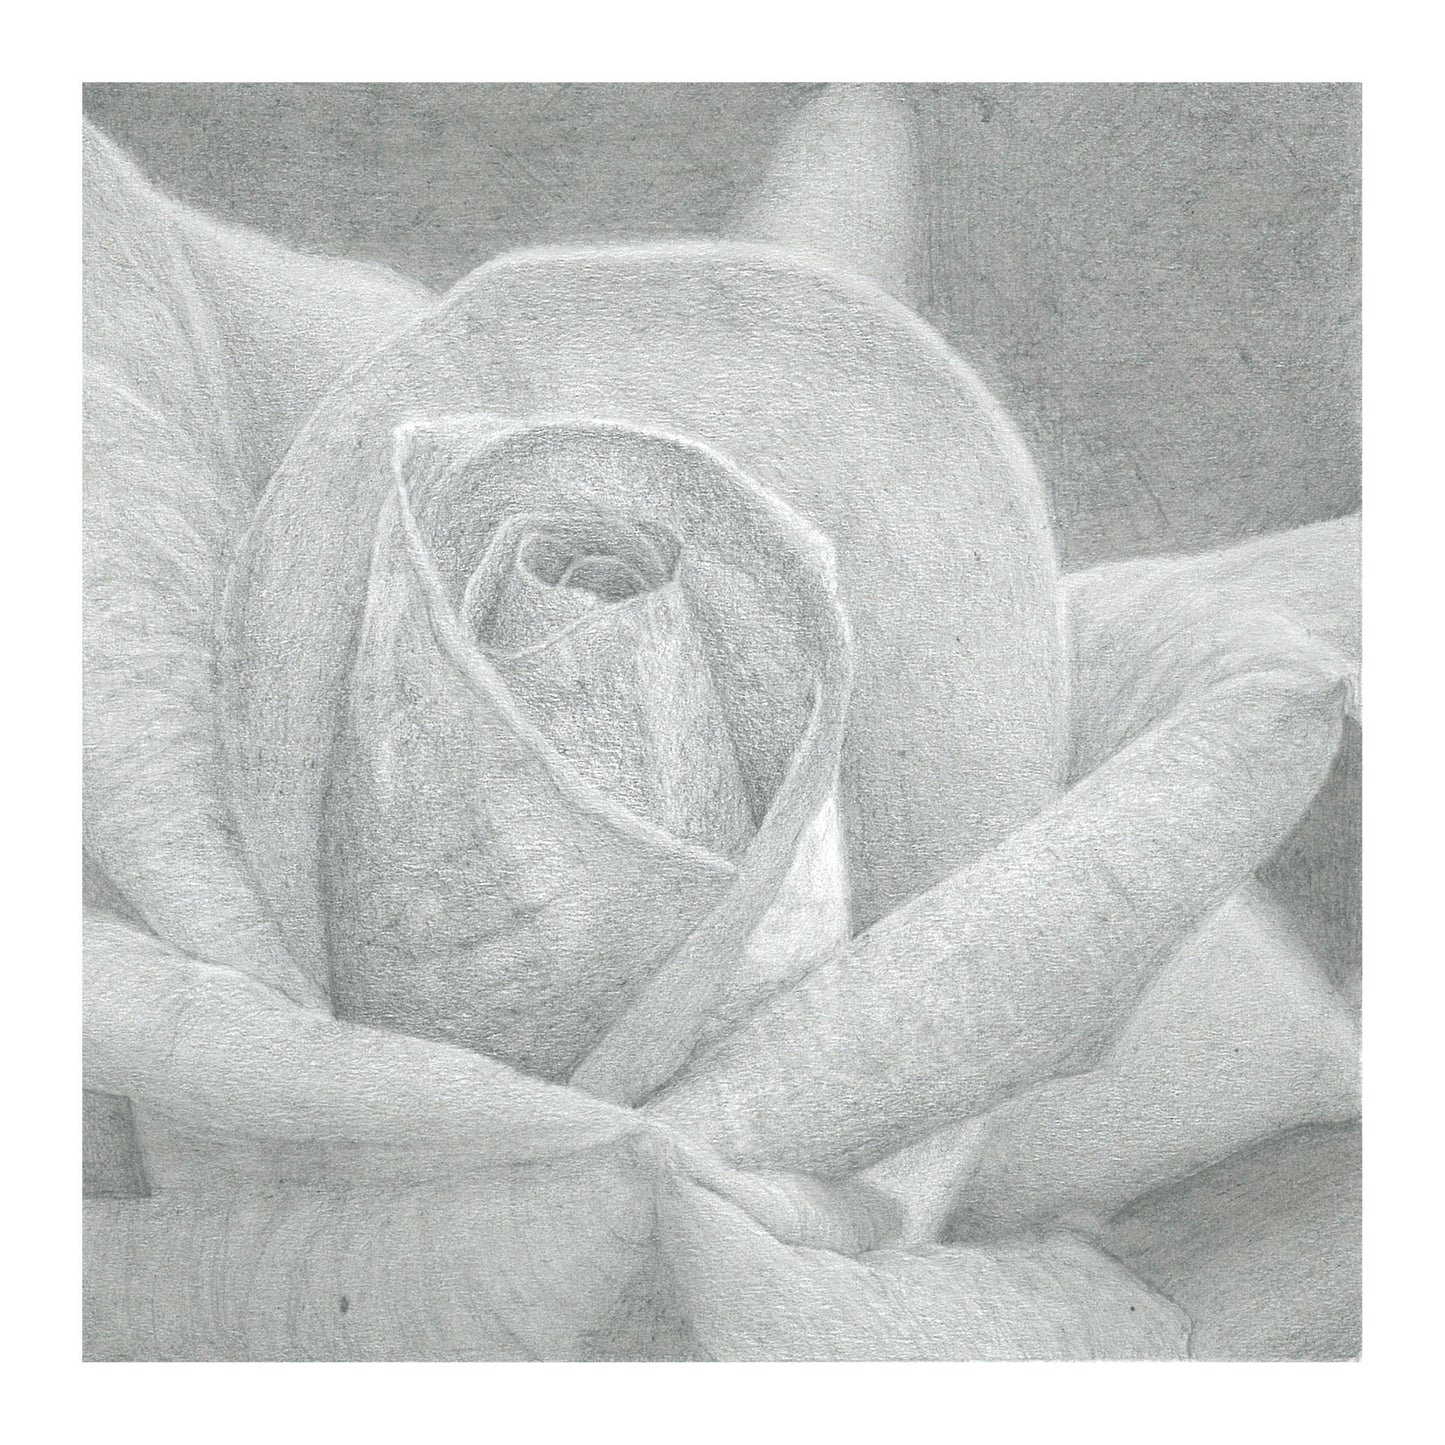 Rose Drawing Hand-made Card